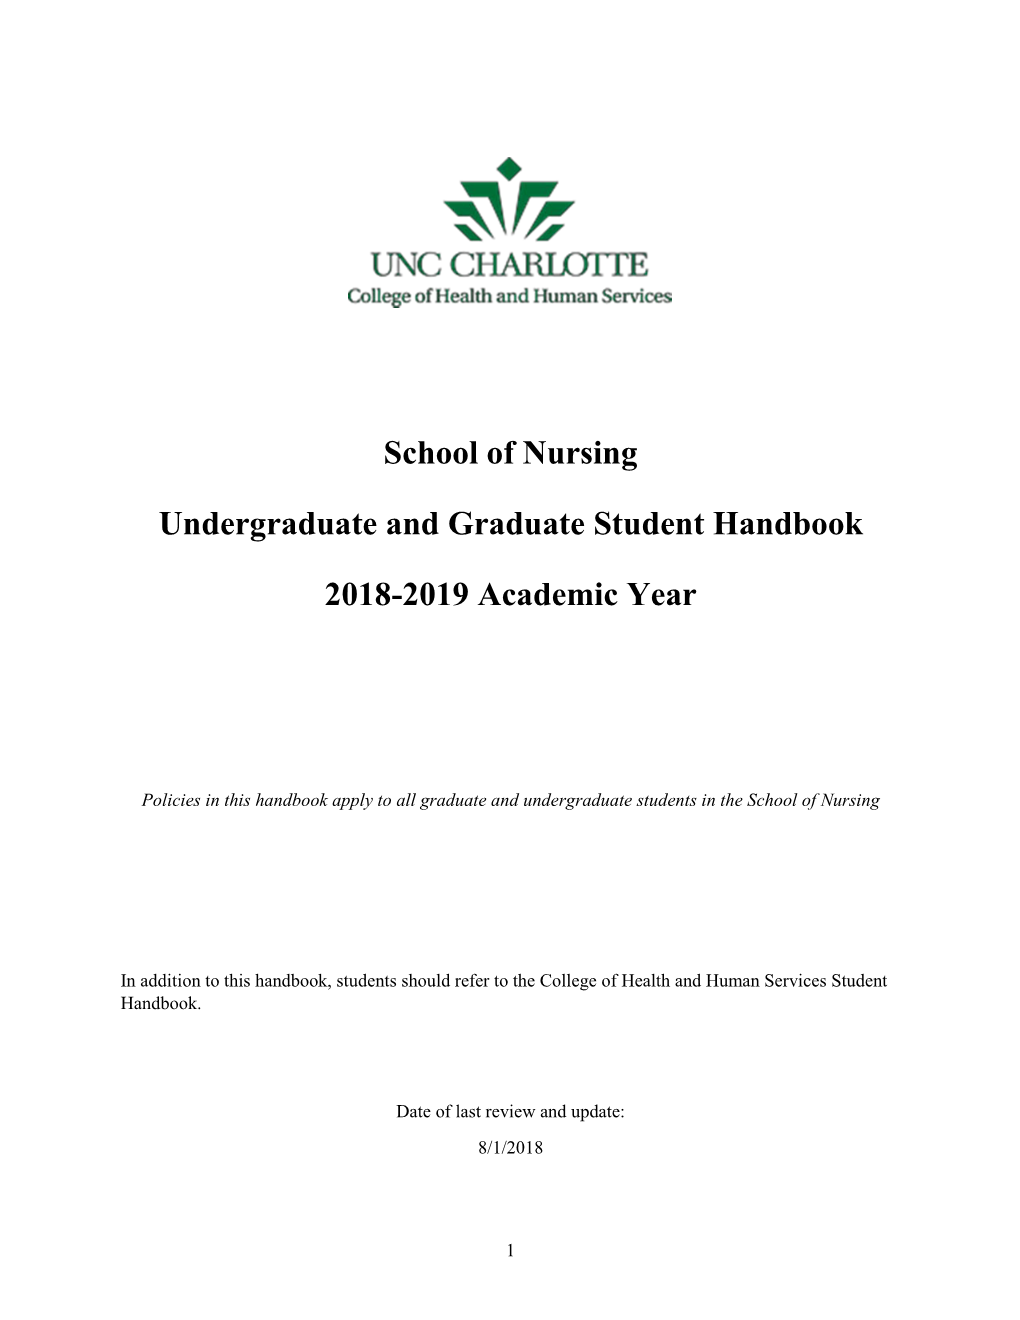 School of Nursing Undergraduate and Graduate Student Handbook 2018